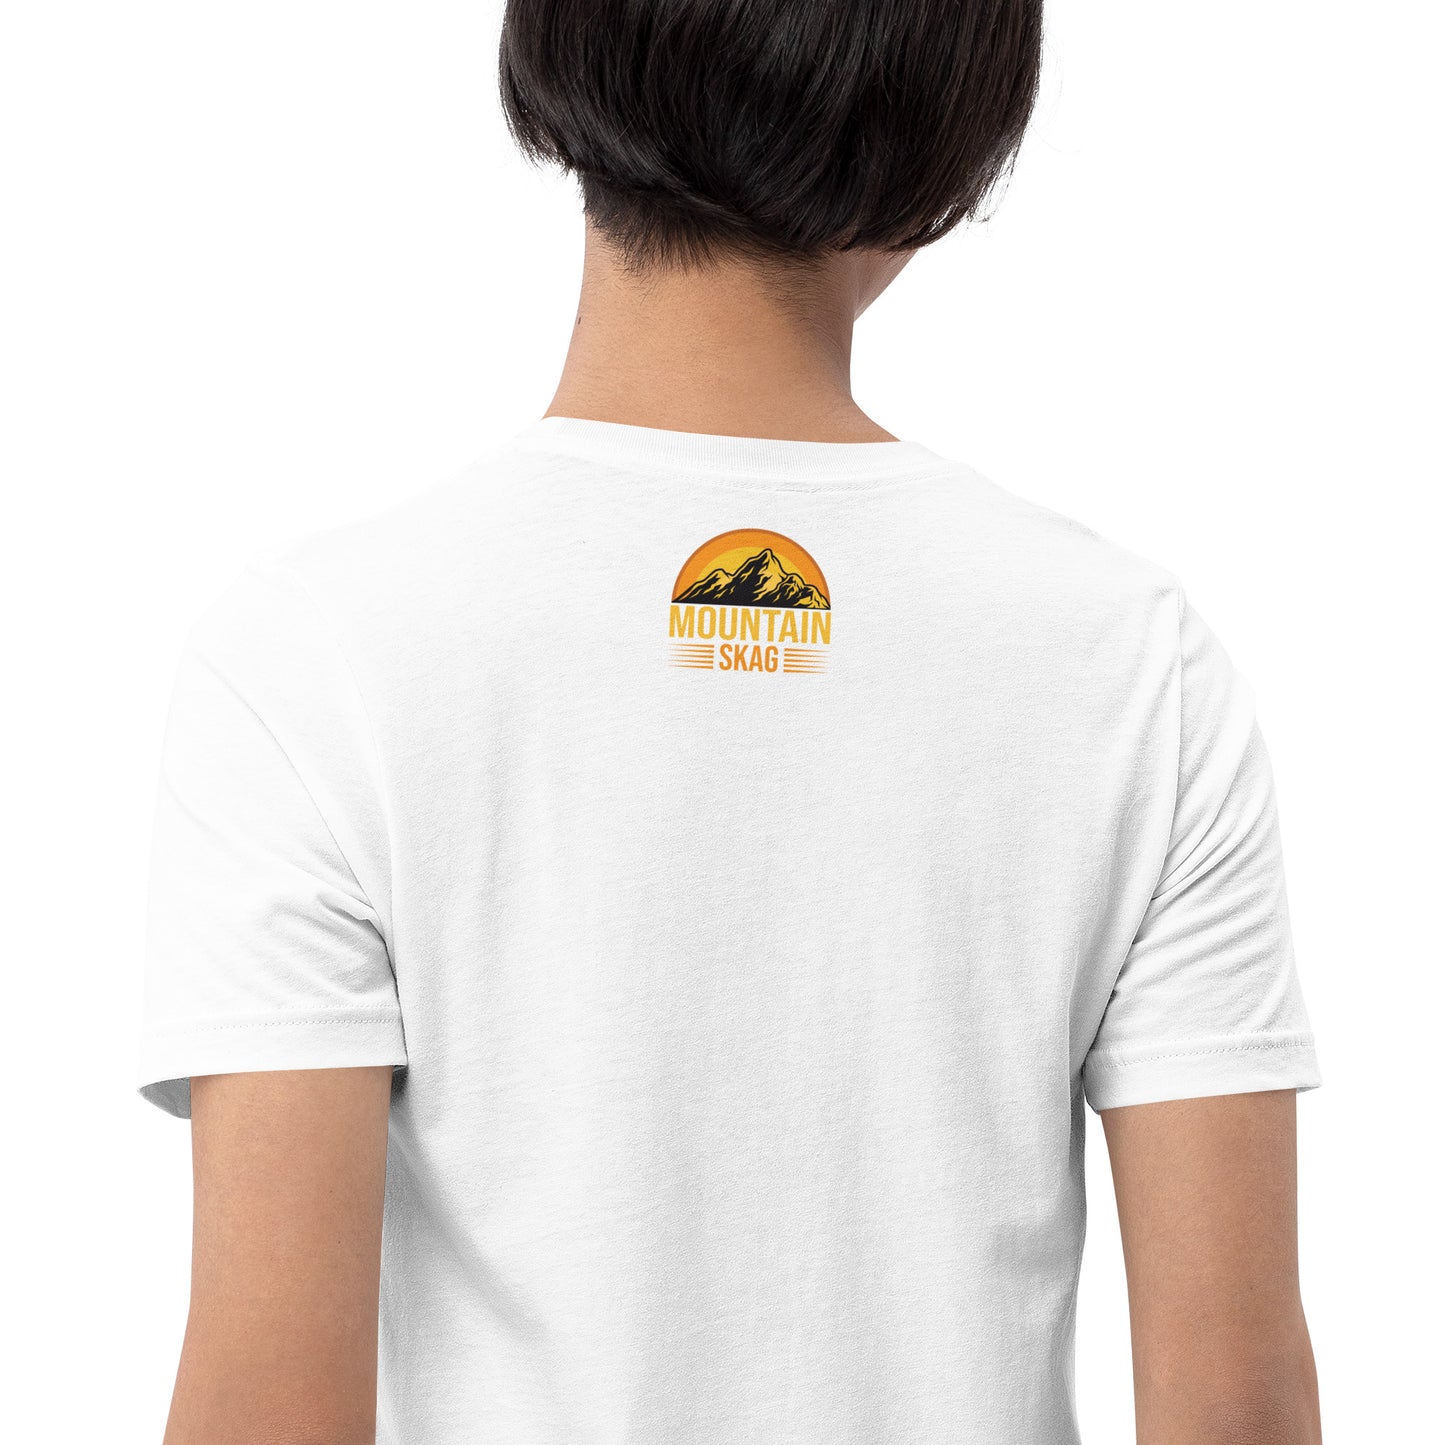 Kime Hut T-shirt (Unisex)